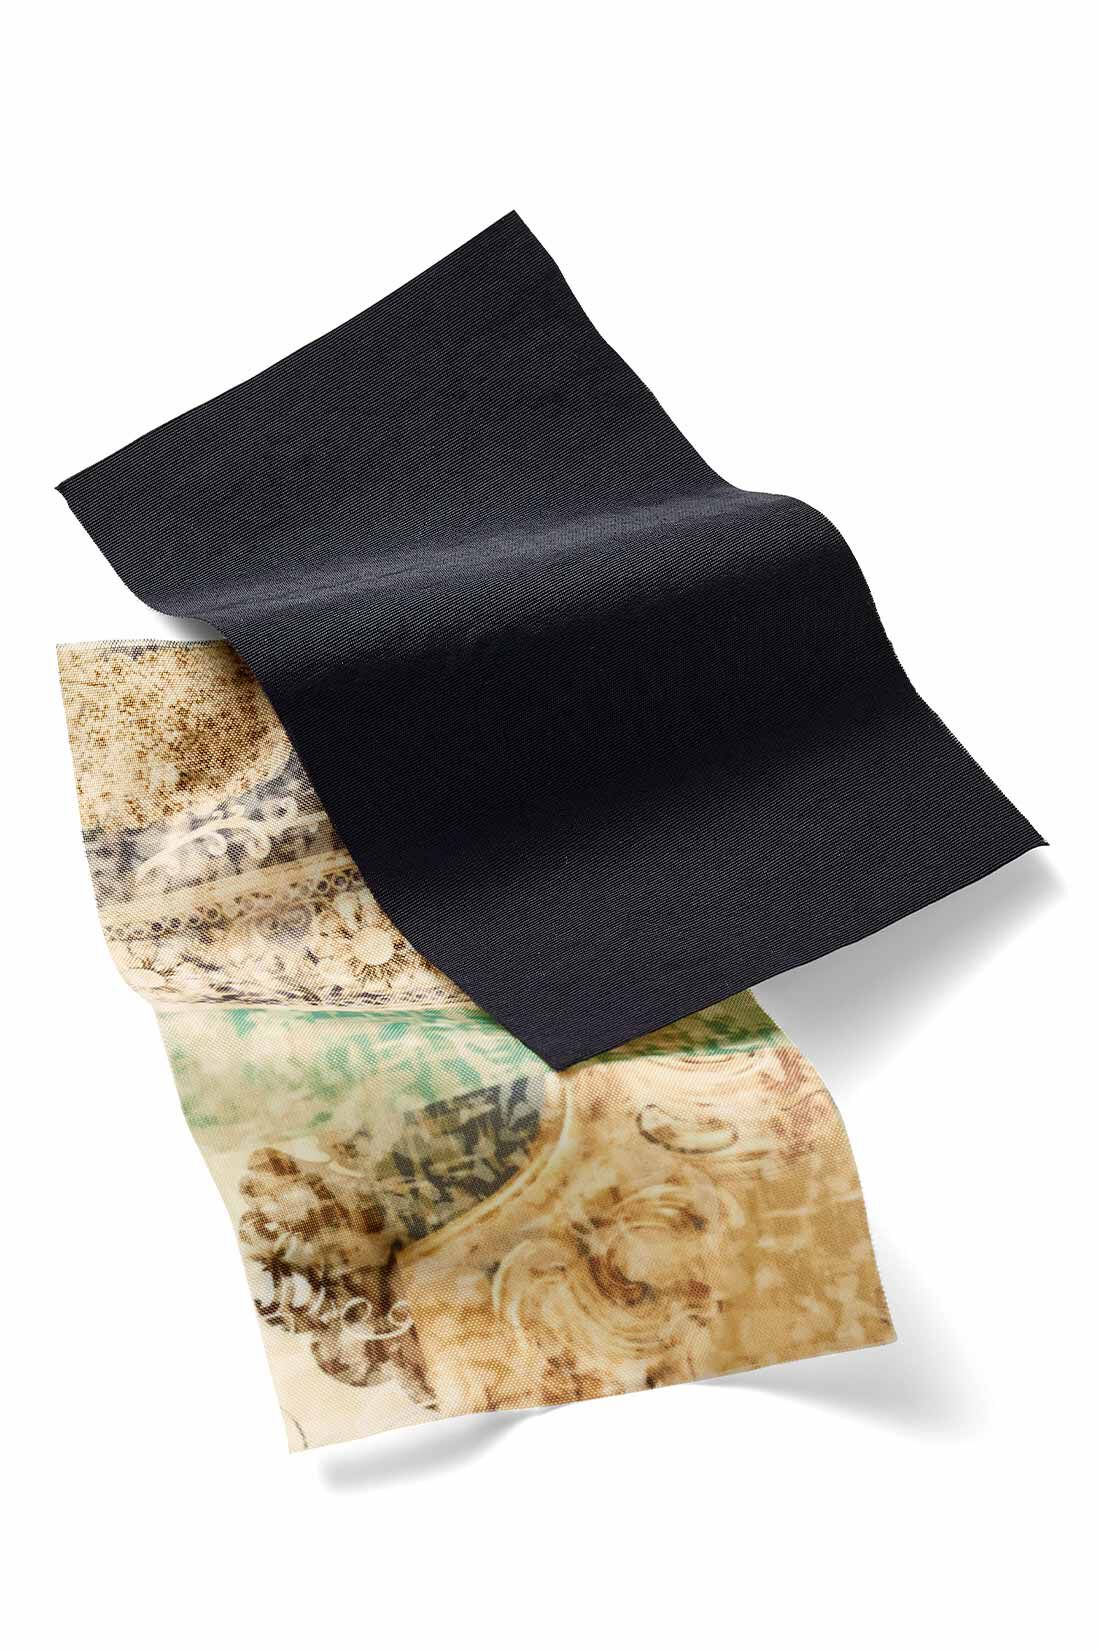 MEDE19F|MEDE19F　スカーフ柄を裏地にした リラックスモッズコート〈ブラック〉|マットな表面感のナイロン素材。軽くてあたたかな中わた入りです。裏地には、こだわりの総柄プリントをオン。